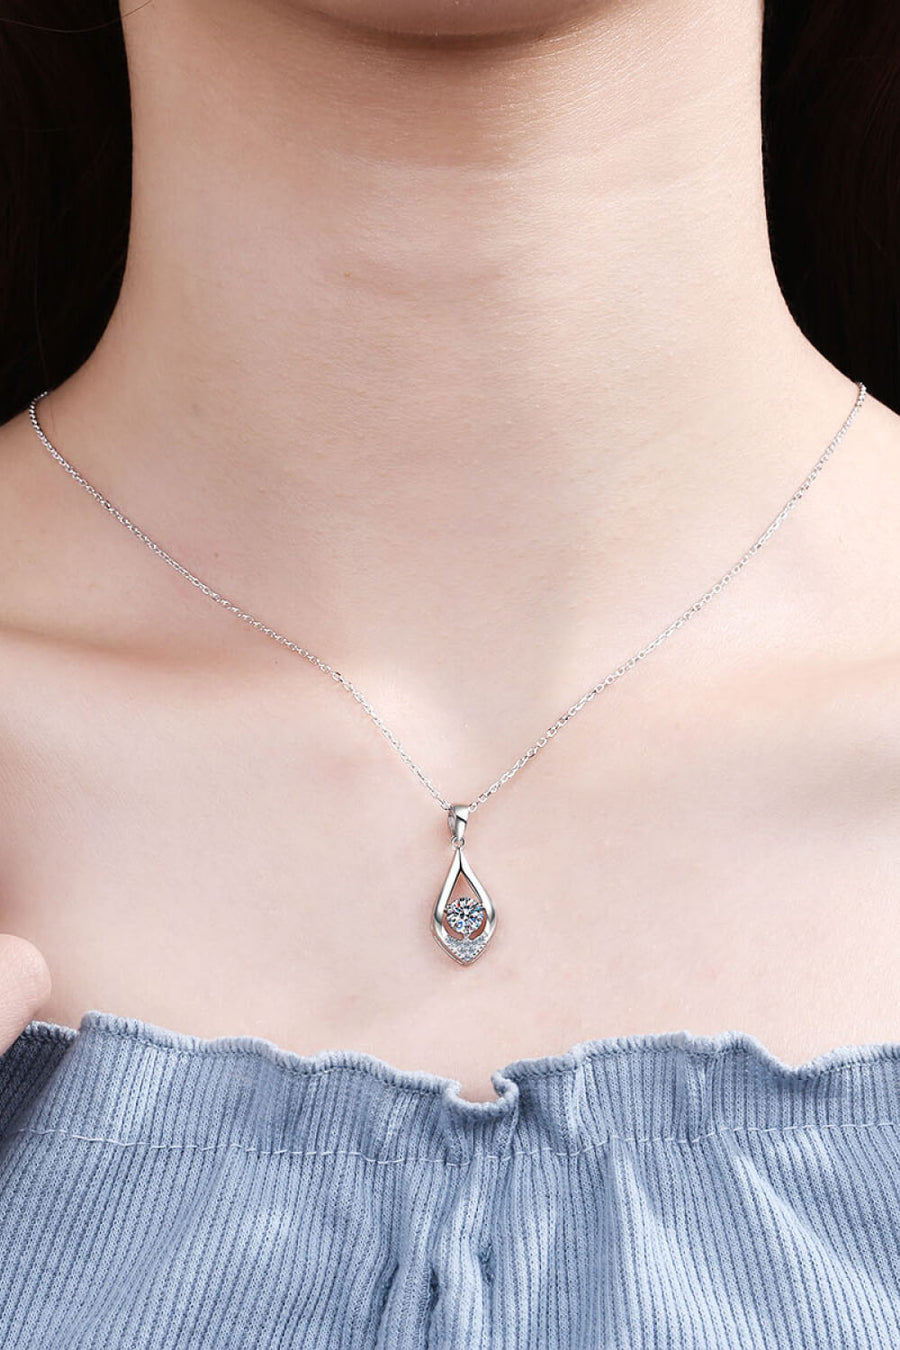 Best Diamond Necklace Jewelry Gifts for Women | 0.5 Carat Diamond Pendant Necklace - Glamorous Always | MASON New York